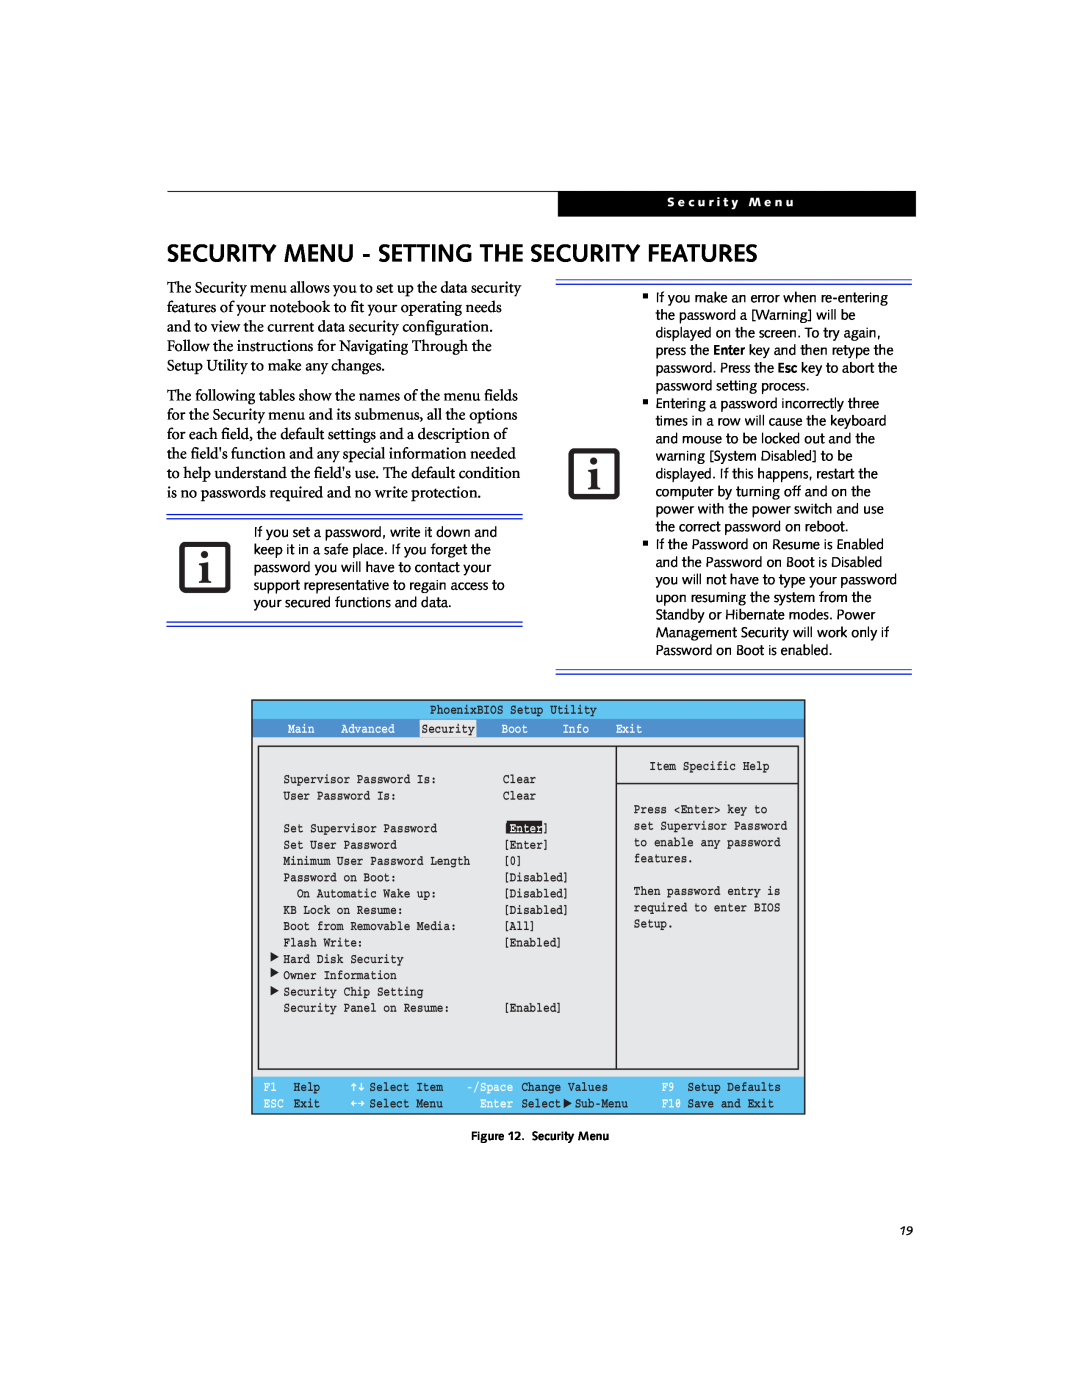 Fujitsu Siemens Computers P1610 manual Security Menu - Setting The Security Features, S e c u r i t y M e n u 